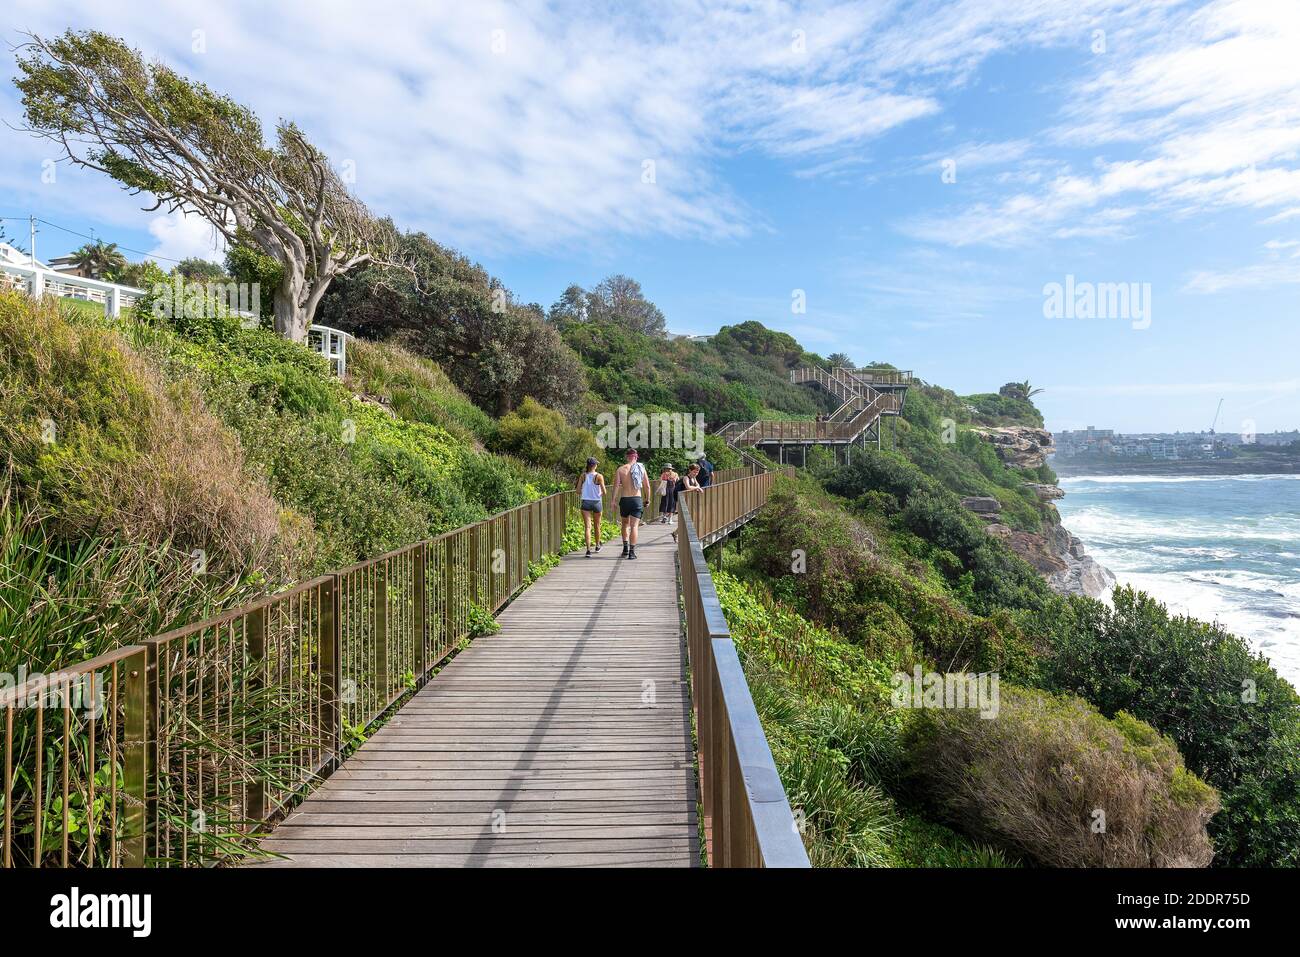 Sydney, Australia - People walking on the Coogee to Bondi coastal walk. This famous coastal walk extends for six km in Sydney's eastern suburbs. Stock Photo